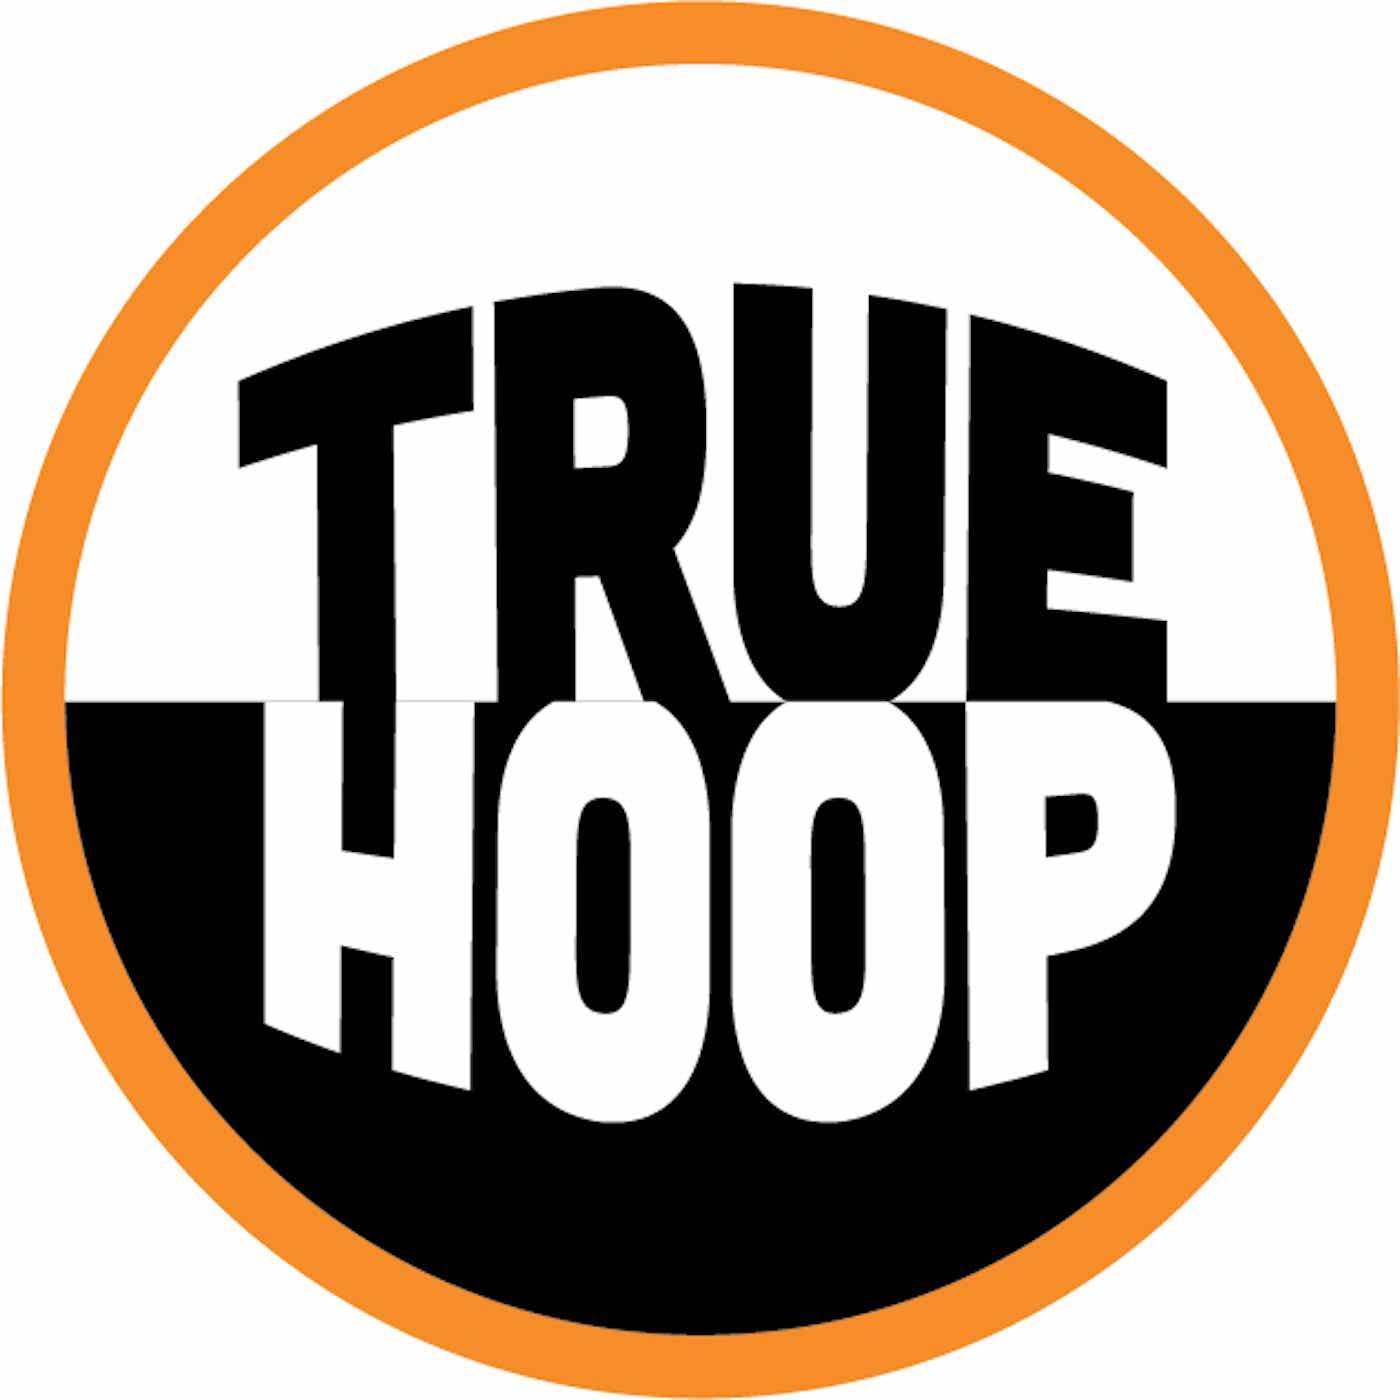 Ask coach Thorpe and top 5 NBA teams